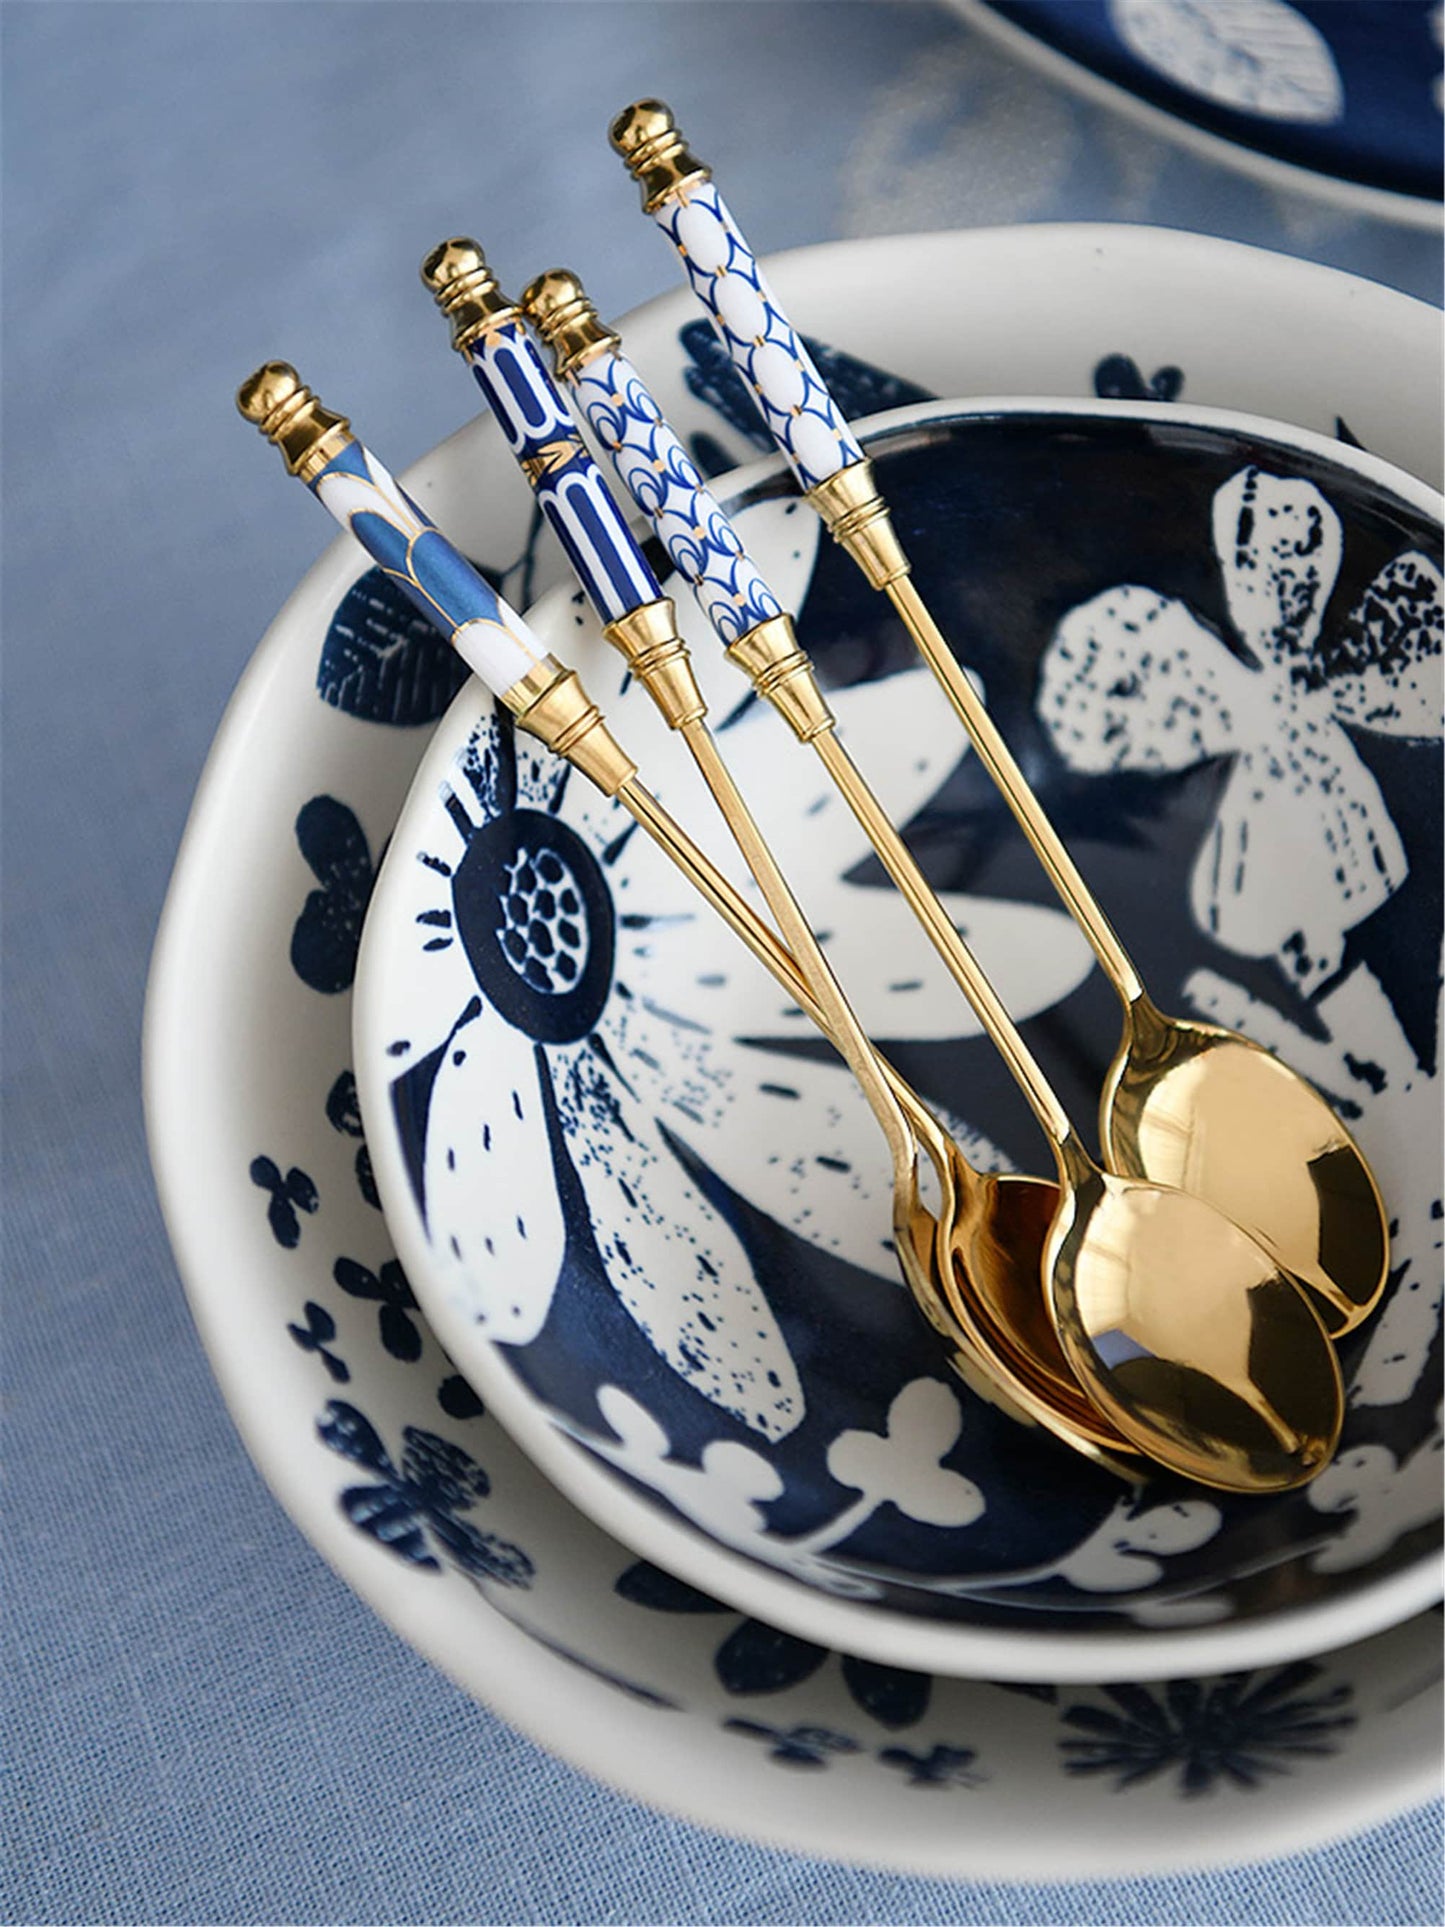 Stainless Steel Spoon, Blue Ceramic Tea Coffee Spoon